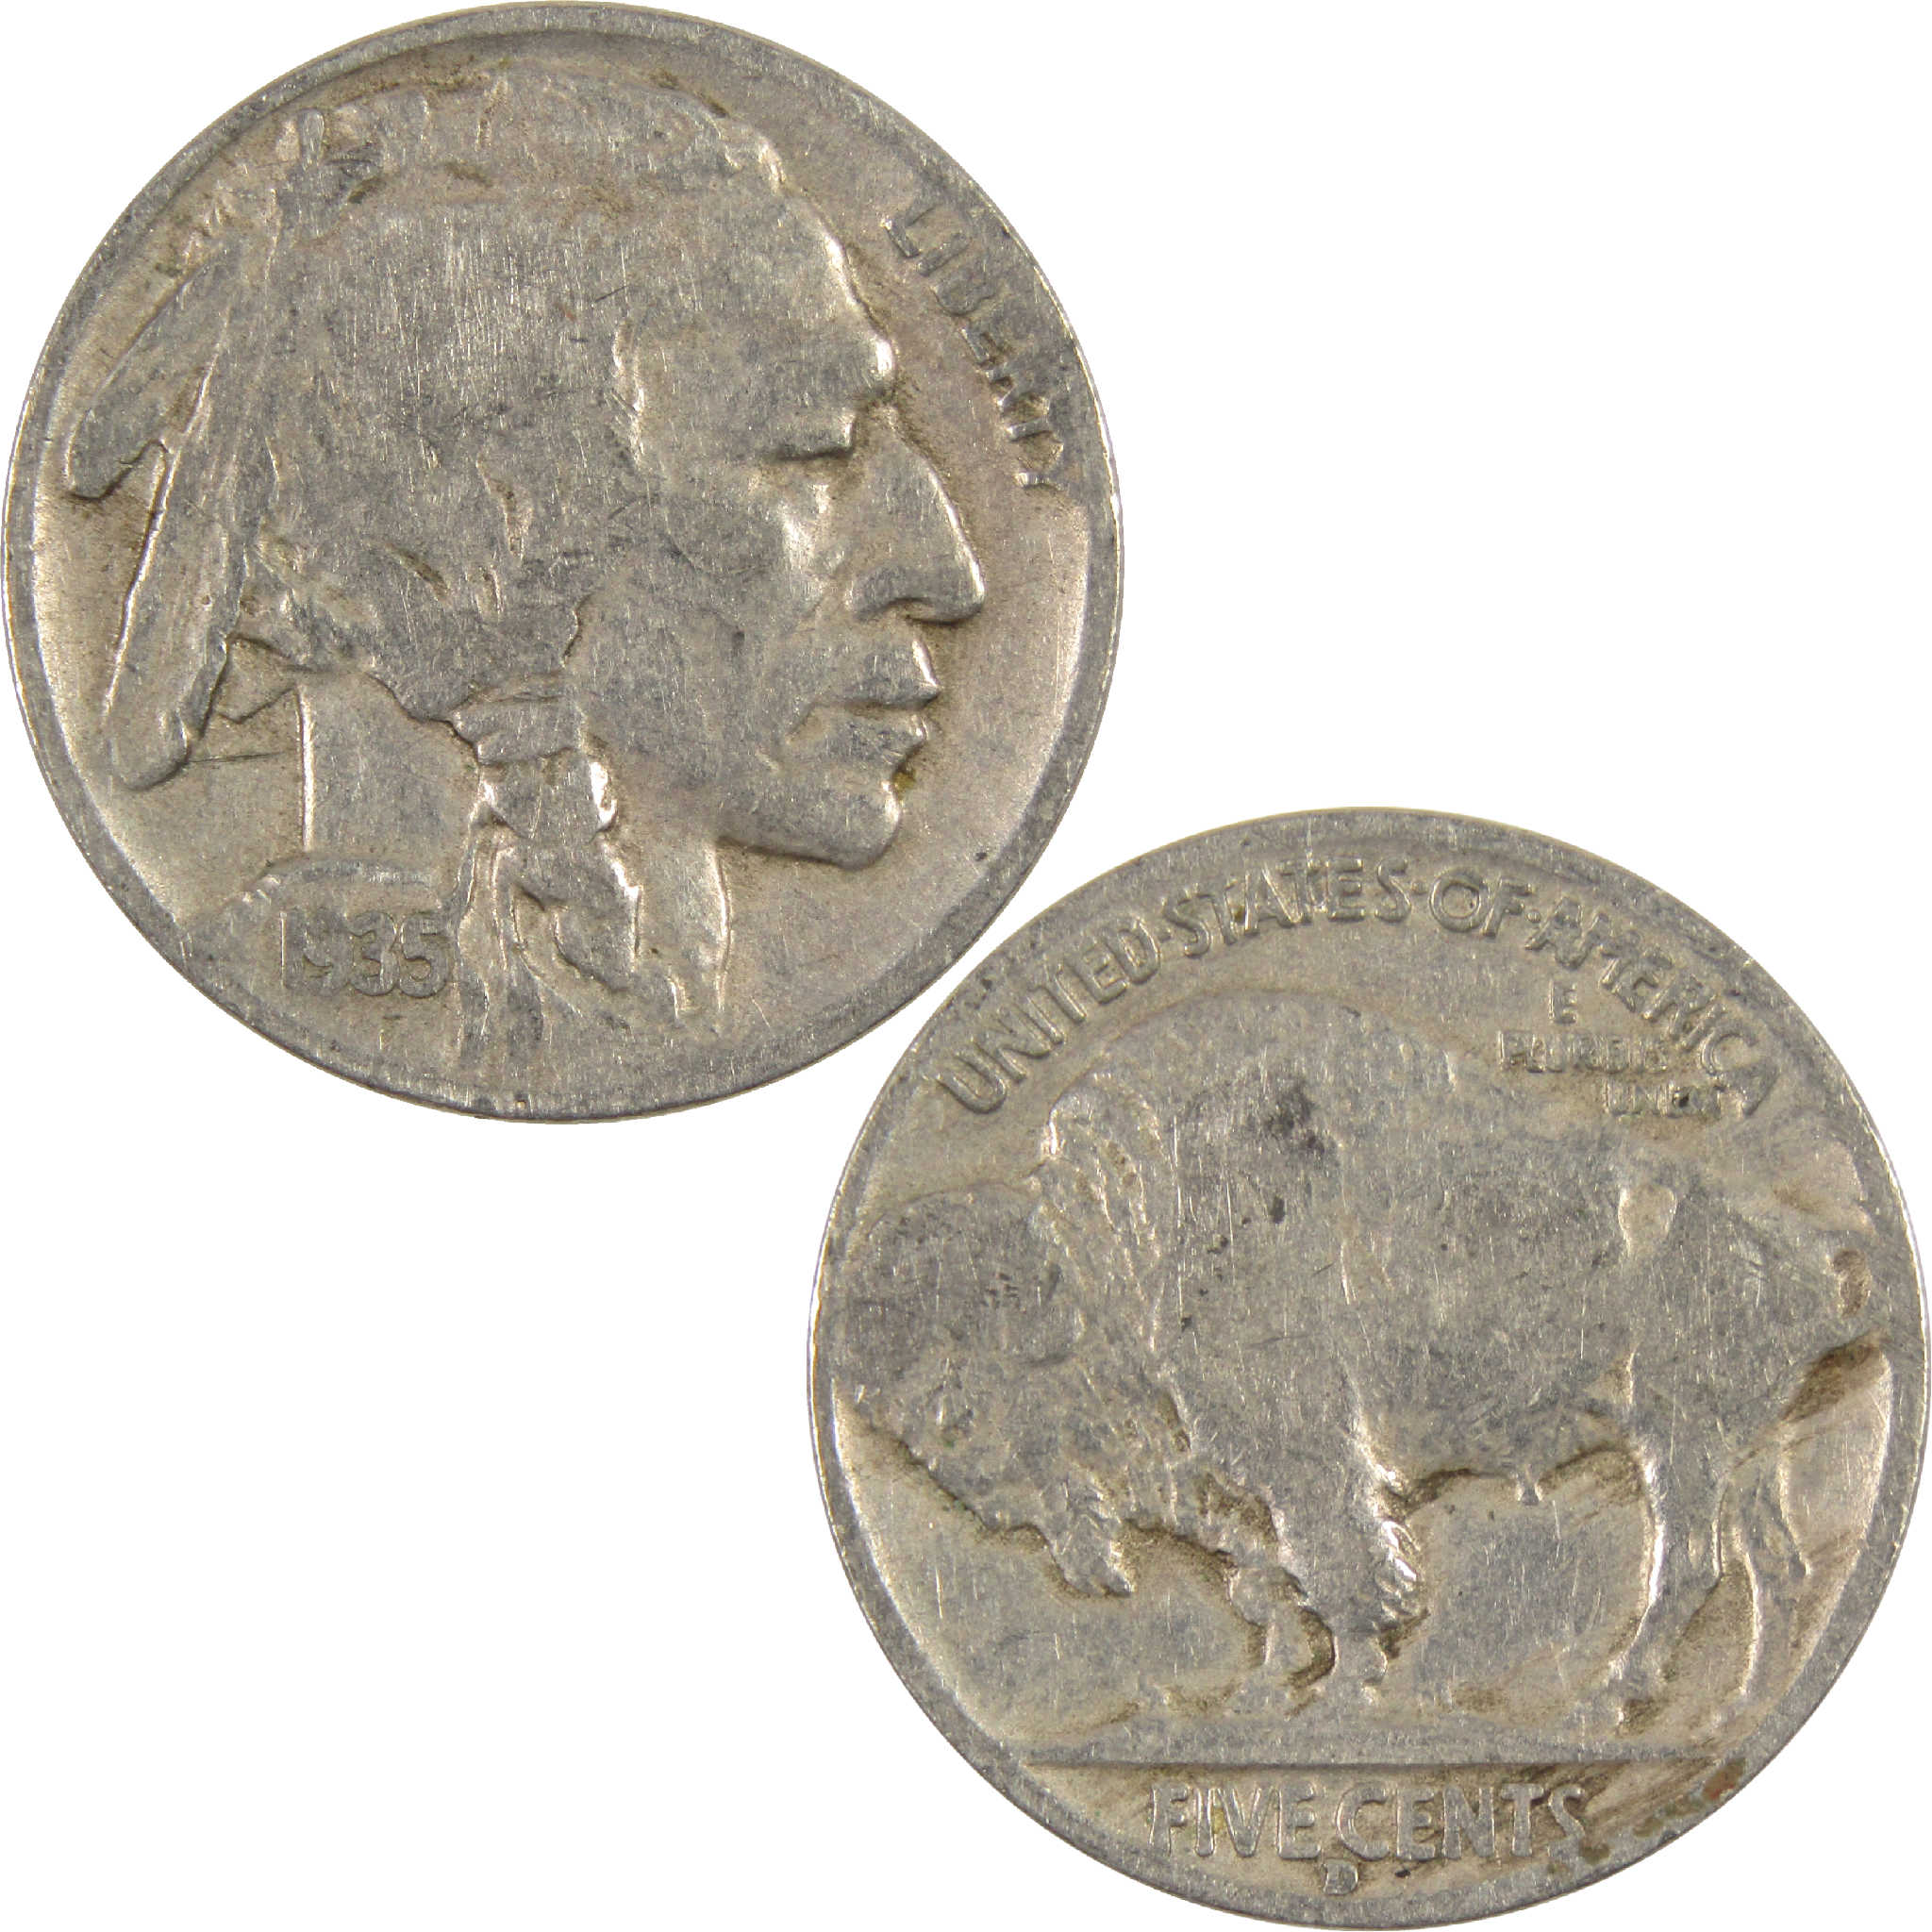 1935 D Indian Head Buffalo Nickel G Good 5c Coin